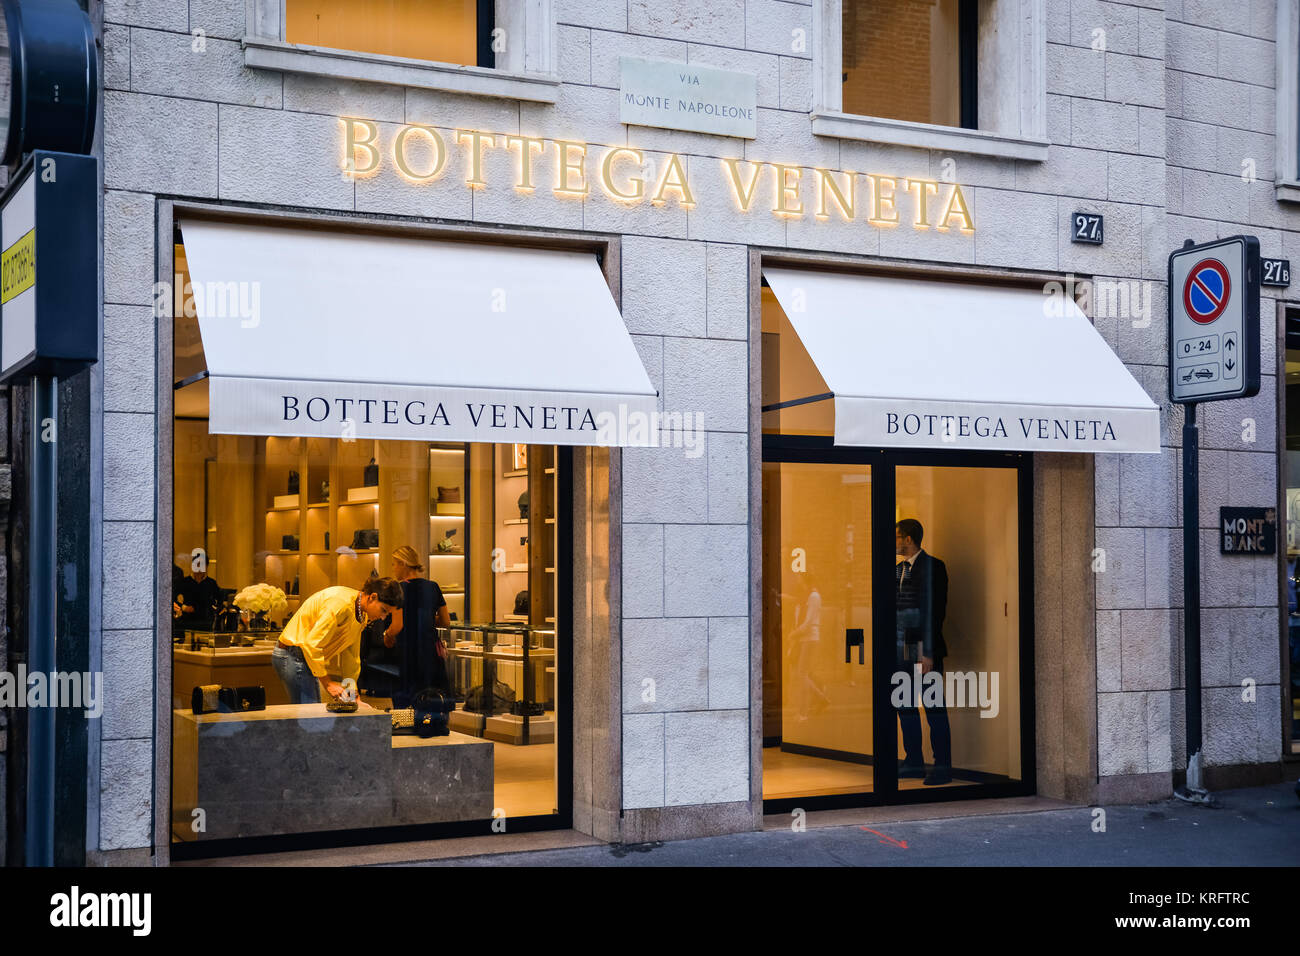 Bottega veneta shop -Fotos und -Bildmaterial in hoher Auflösung – Alamy